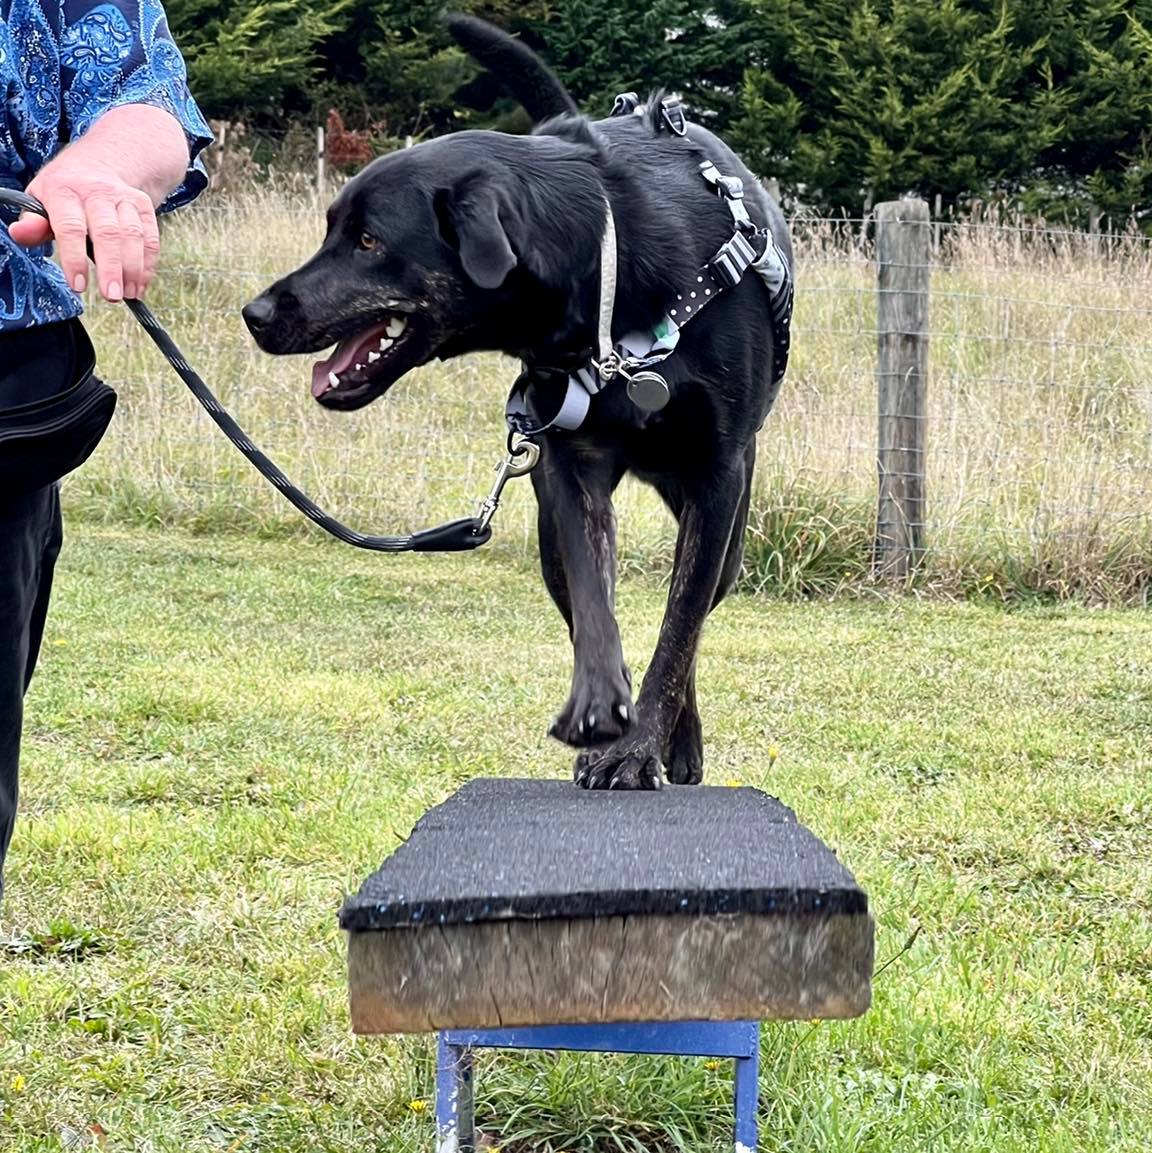 A black dog named Chicca training